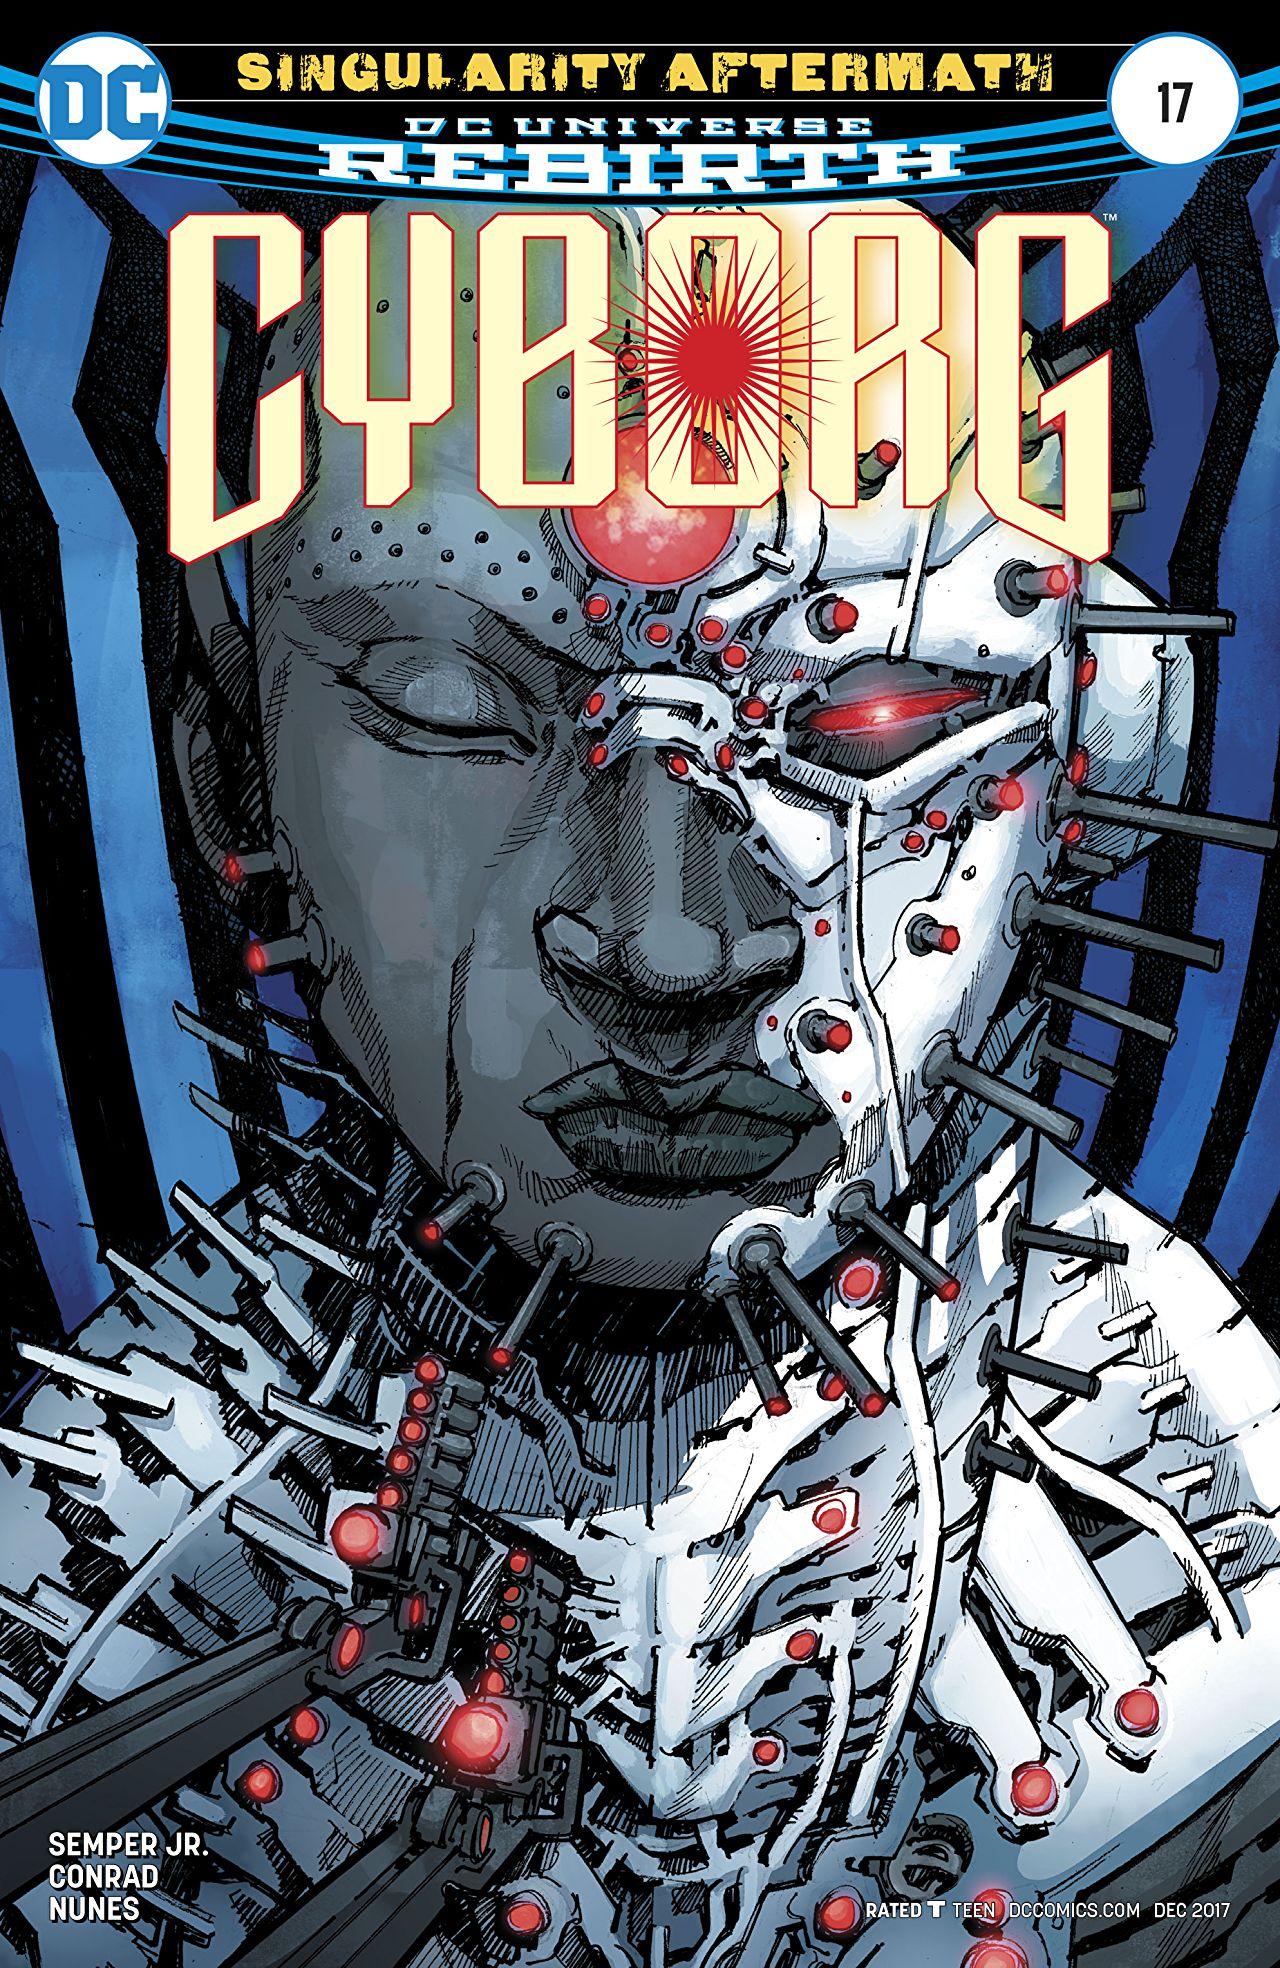 Cyborg Vol. 2 #17